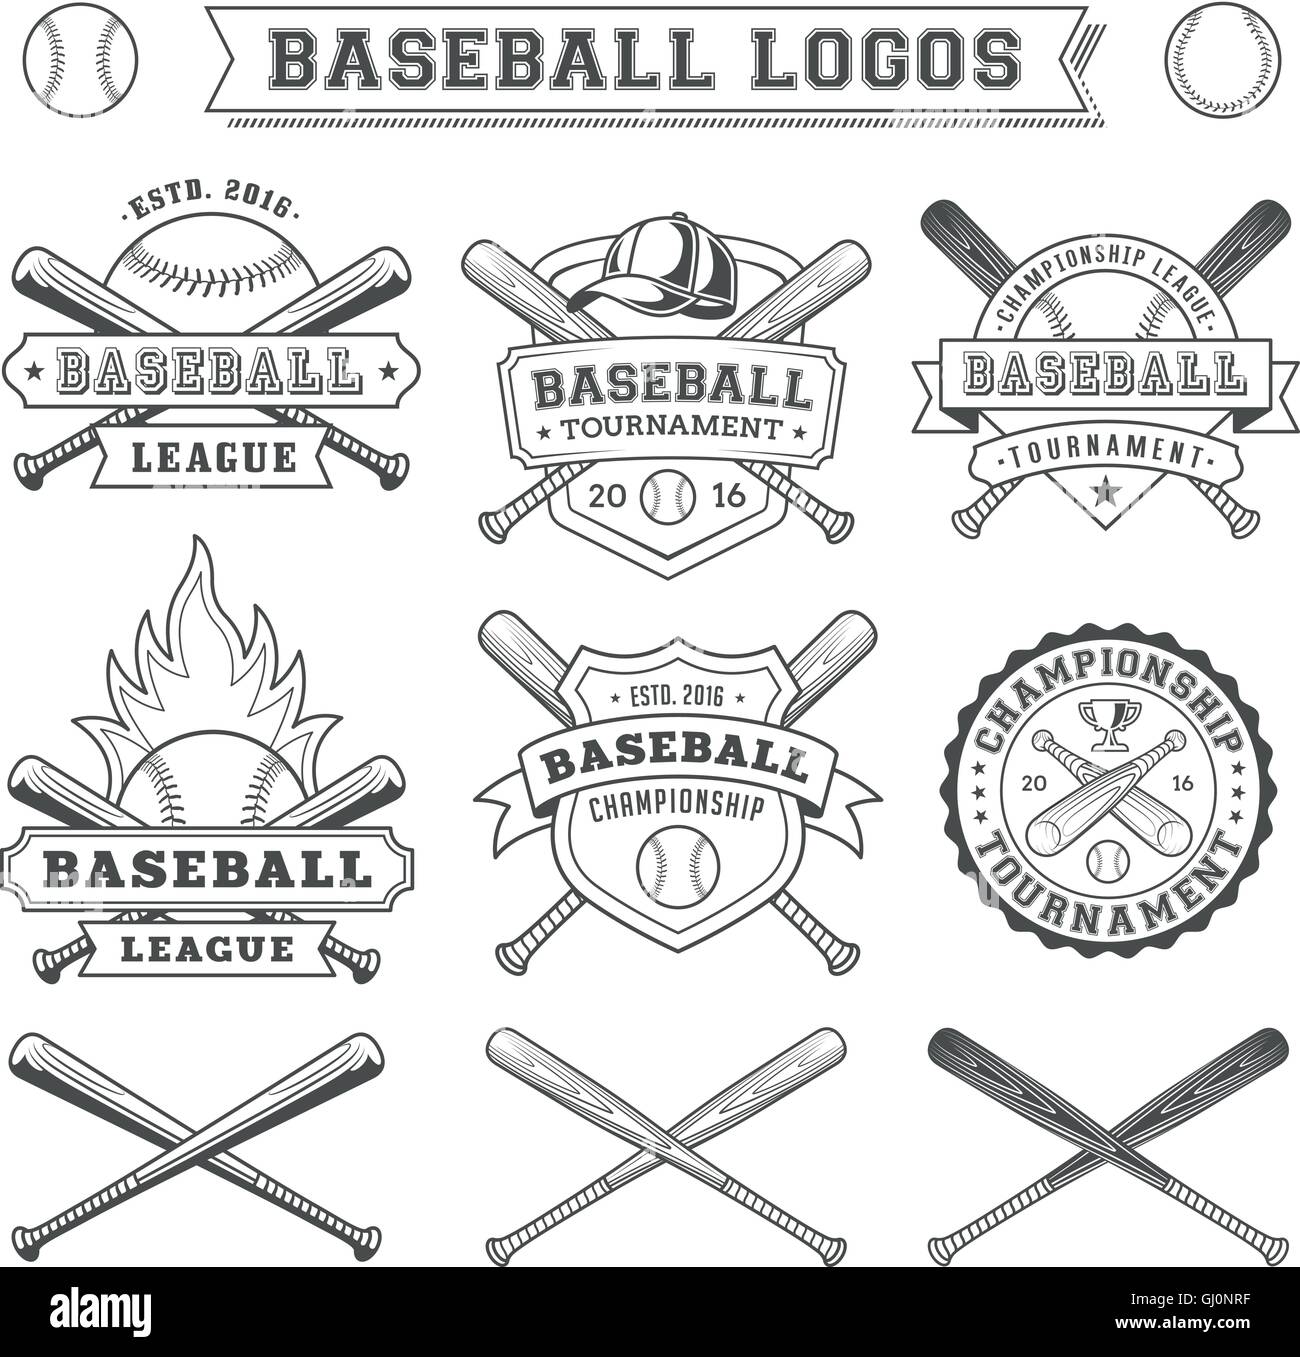 Black and White Vector Baseball logo and insignias Stock Vector